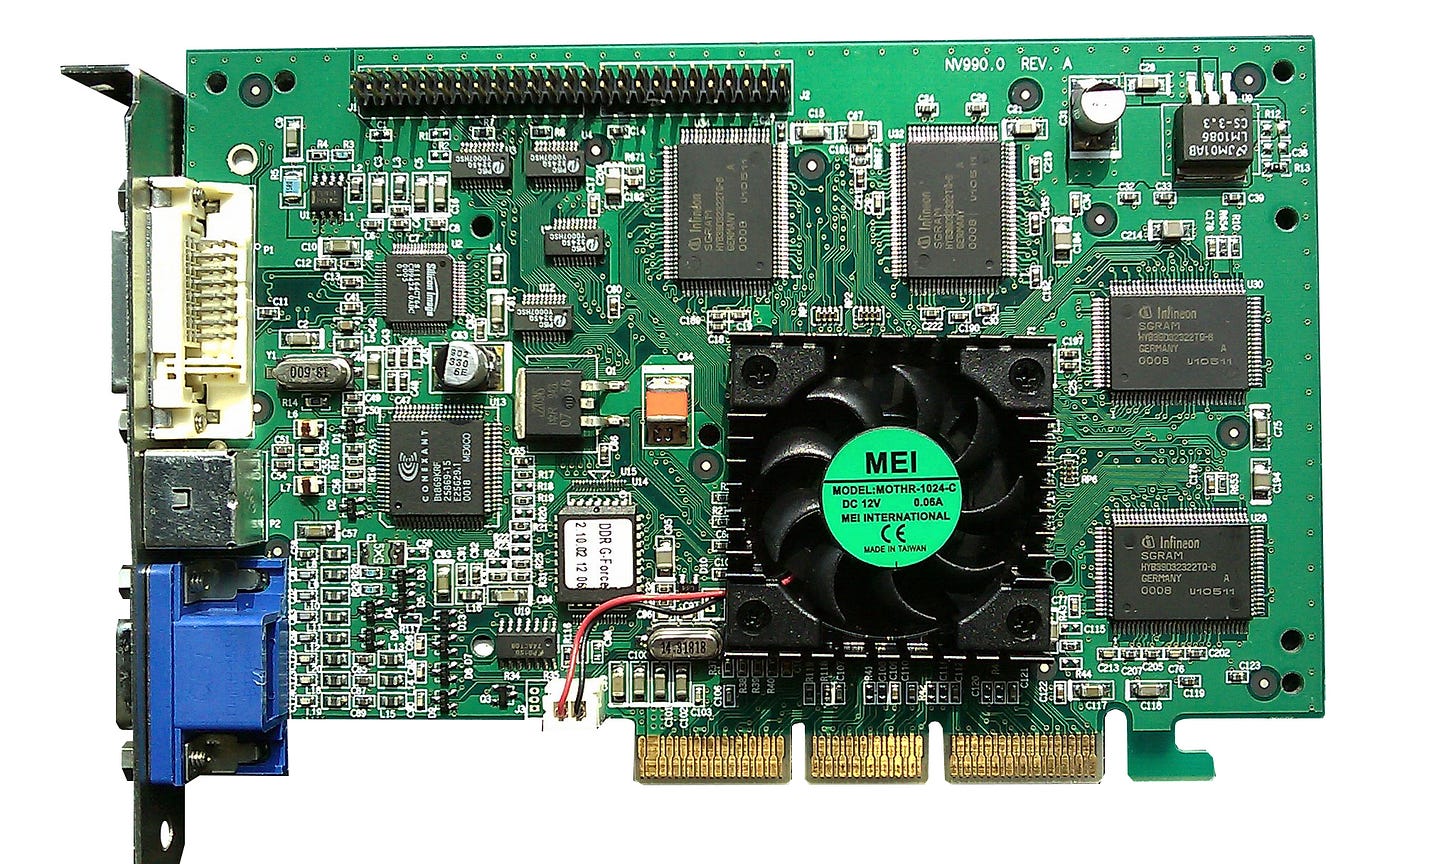 GeForce 256 - Wikipedia